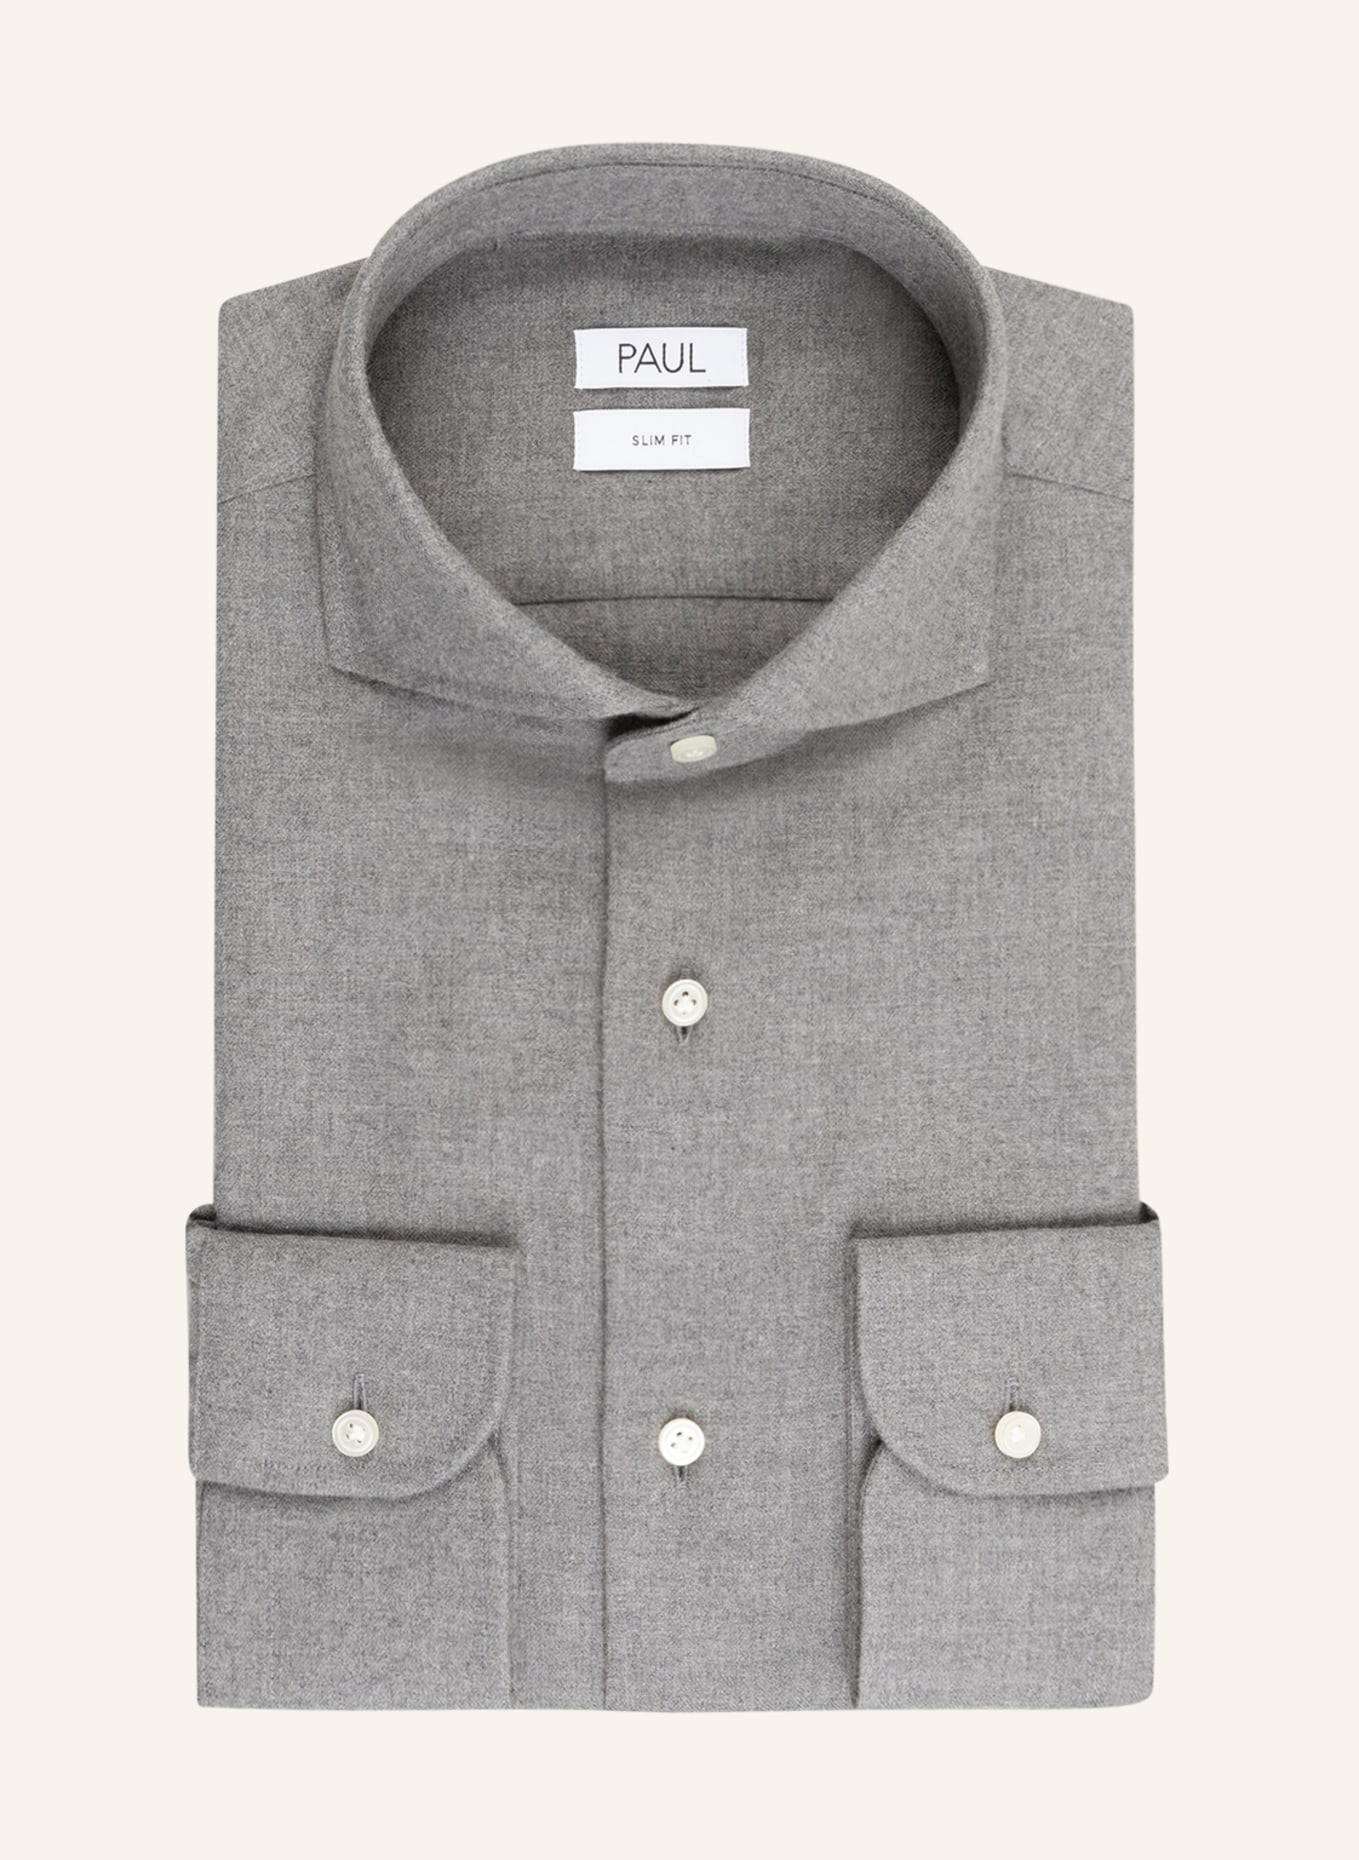 PAUL Shirt slim fit, Color: GRAY (Image 1)